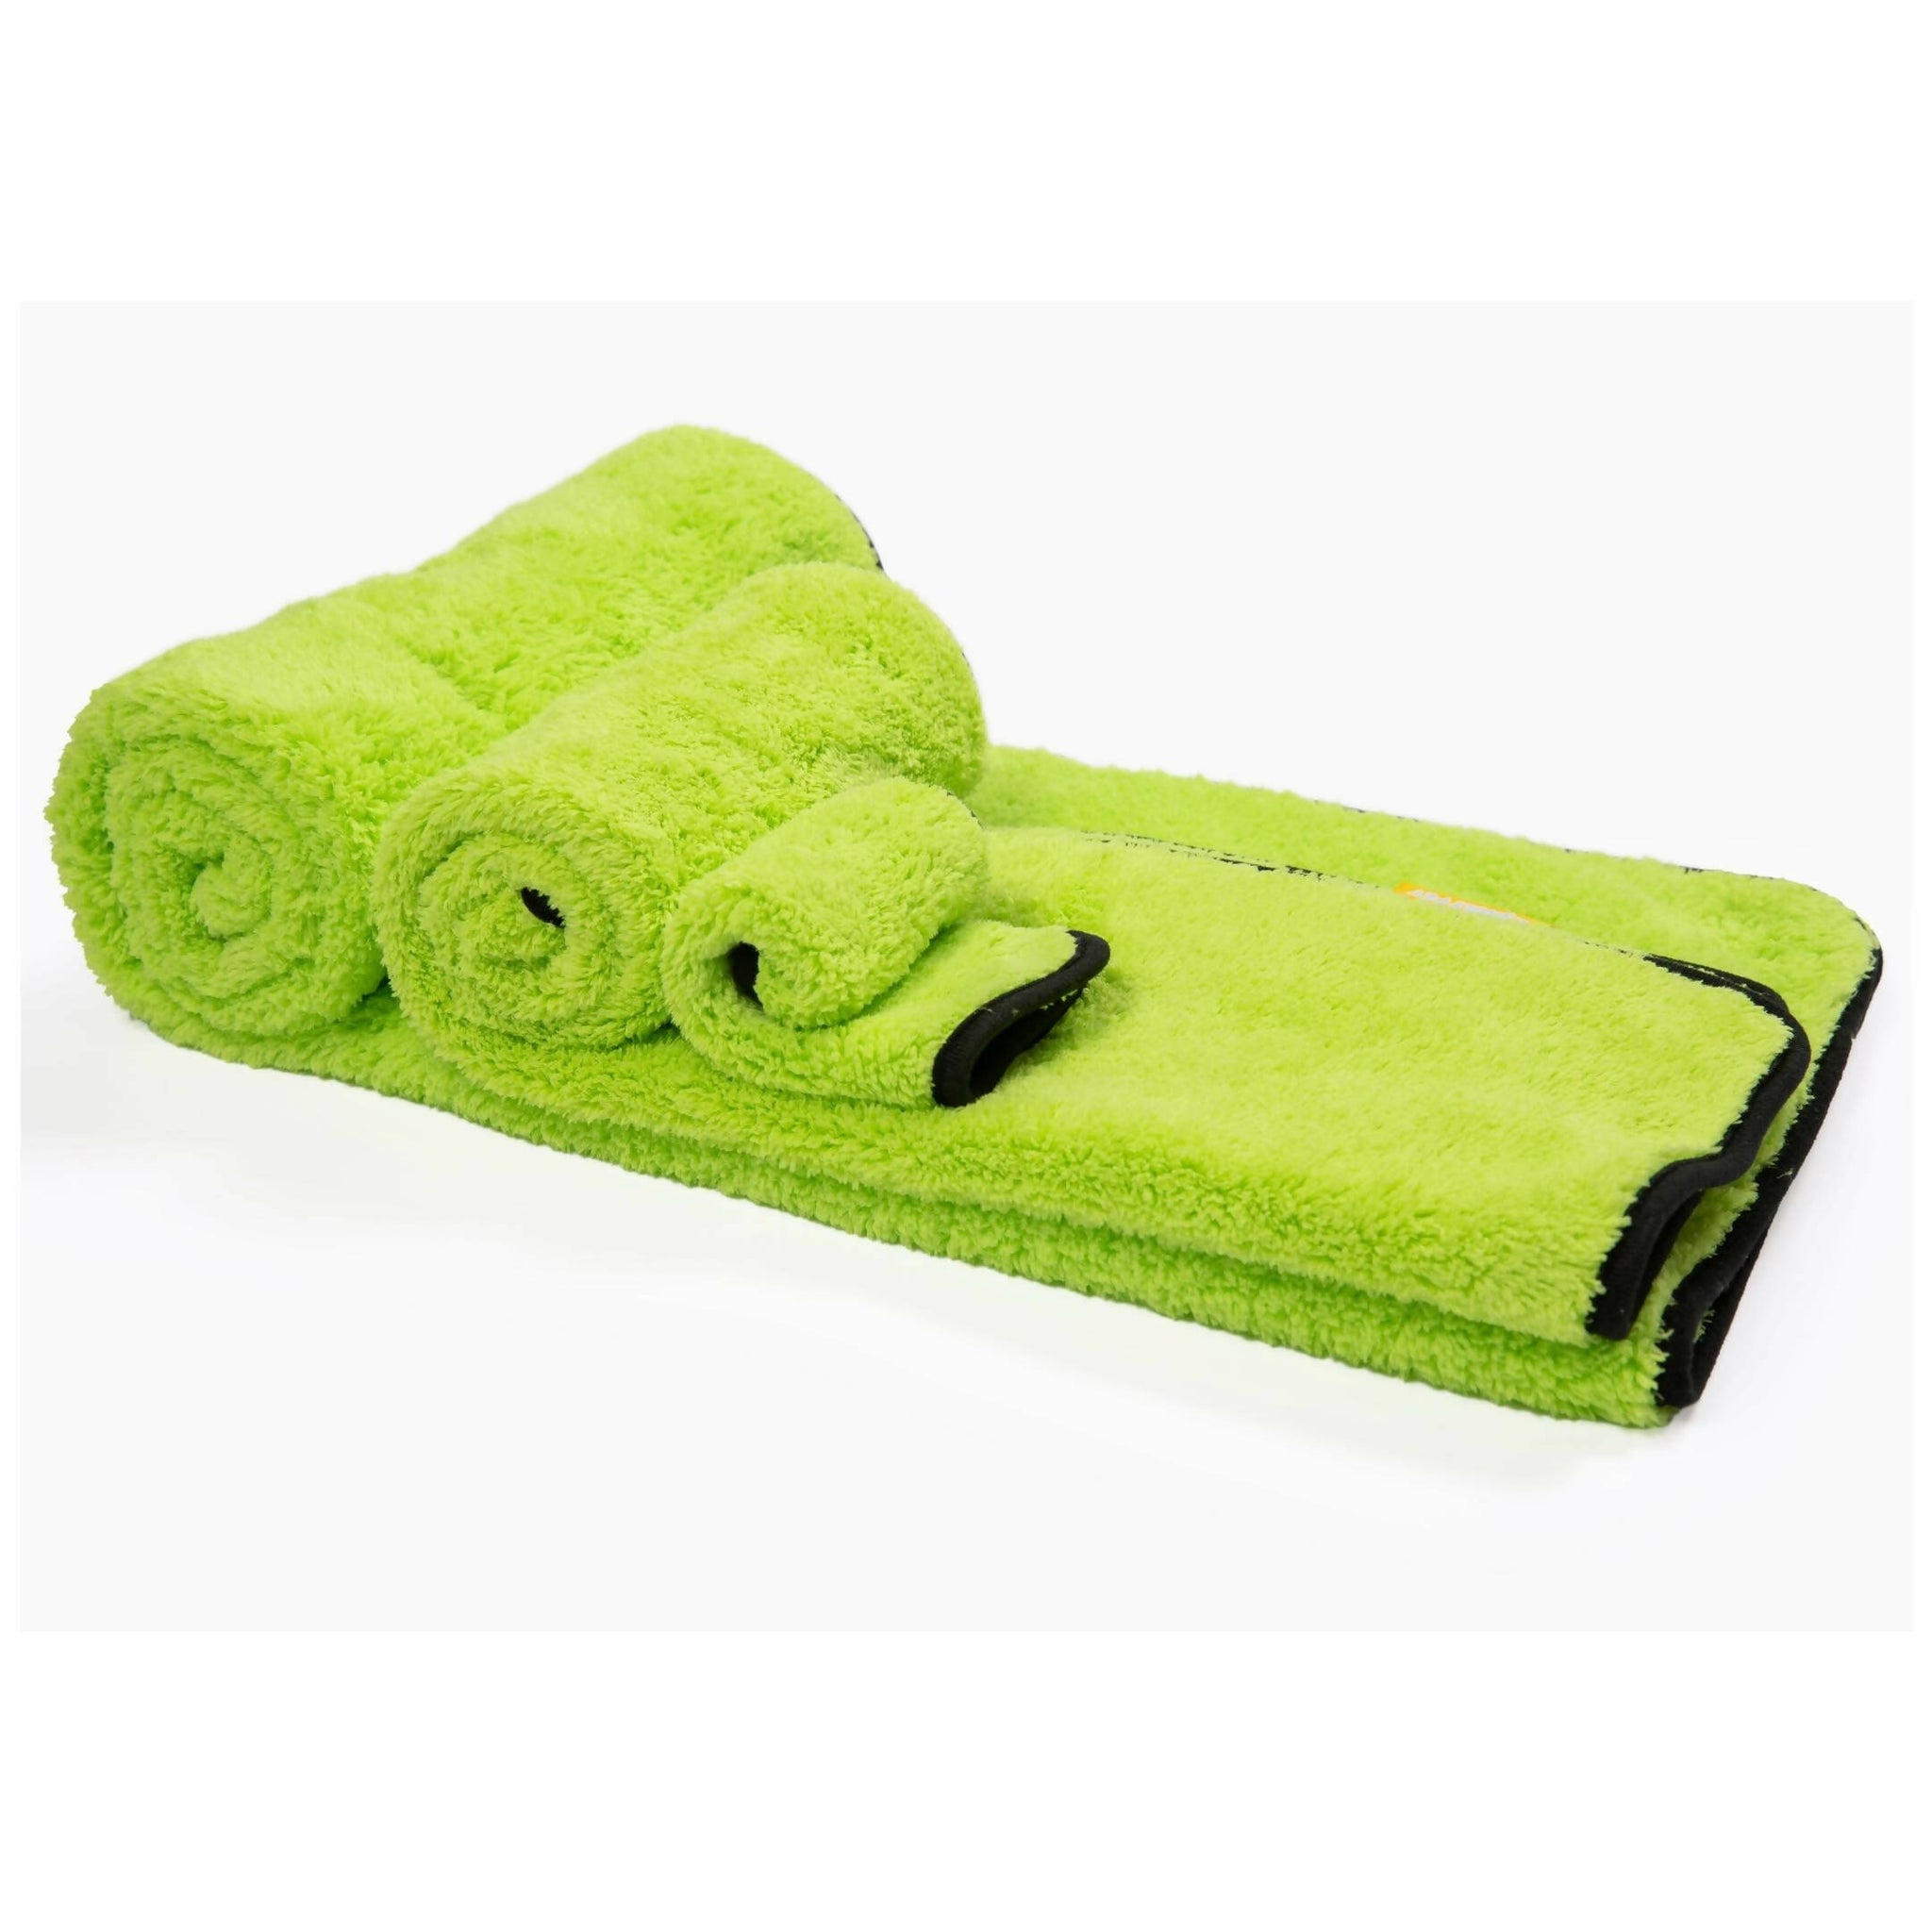 [TRULYPET] [2+2] Large 4 PACK 반려동물용 흡수력 강한 목욕 타월 Sponge Towel for Pets - Super Absorbent Pet Bath Towel (Large 2 Pack)